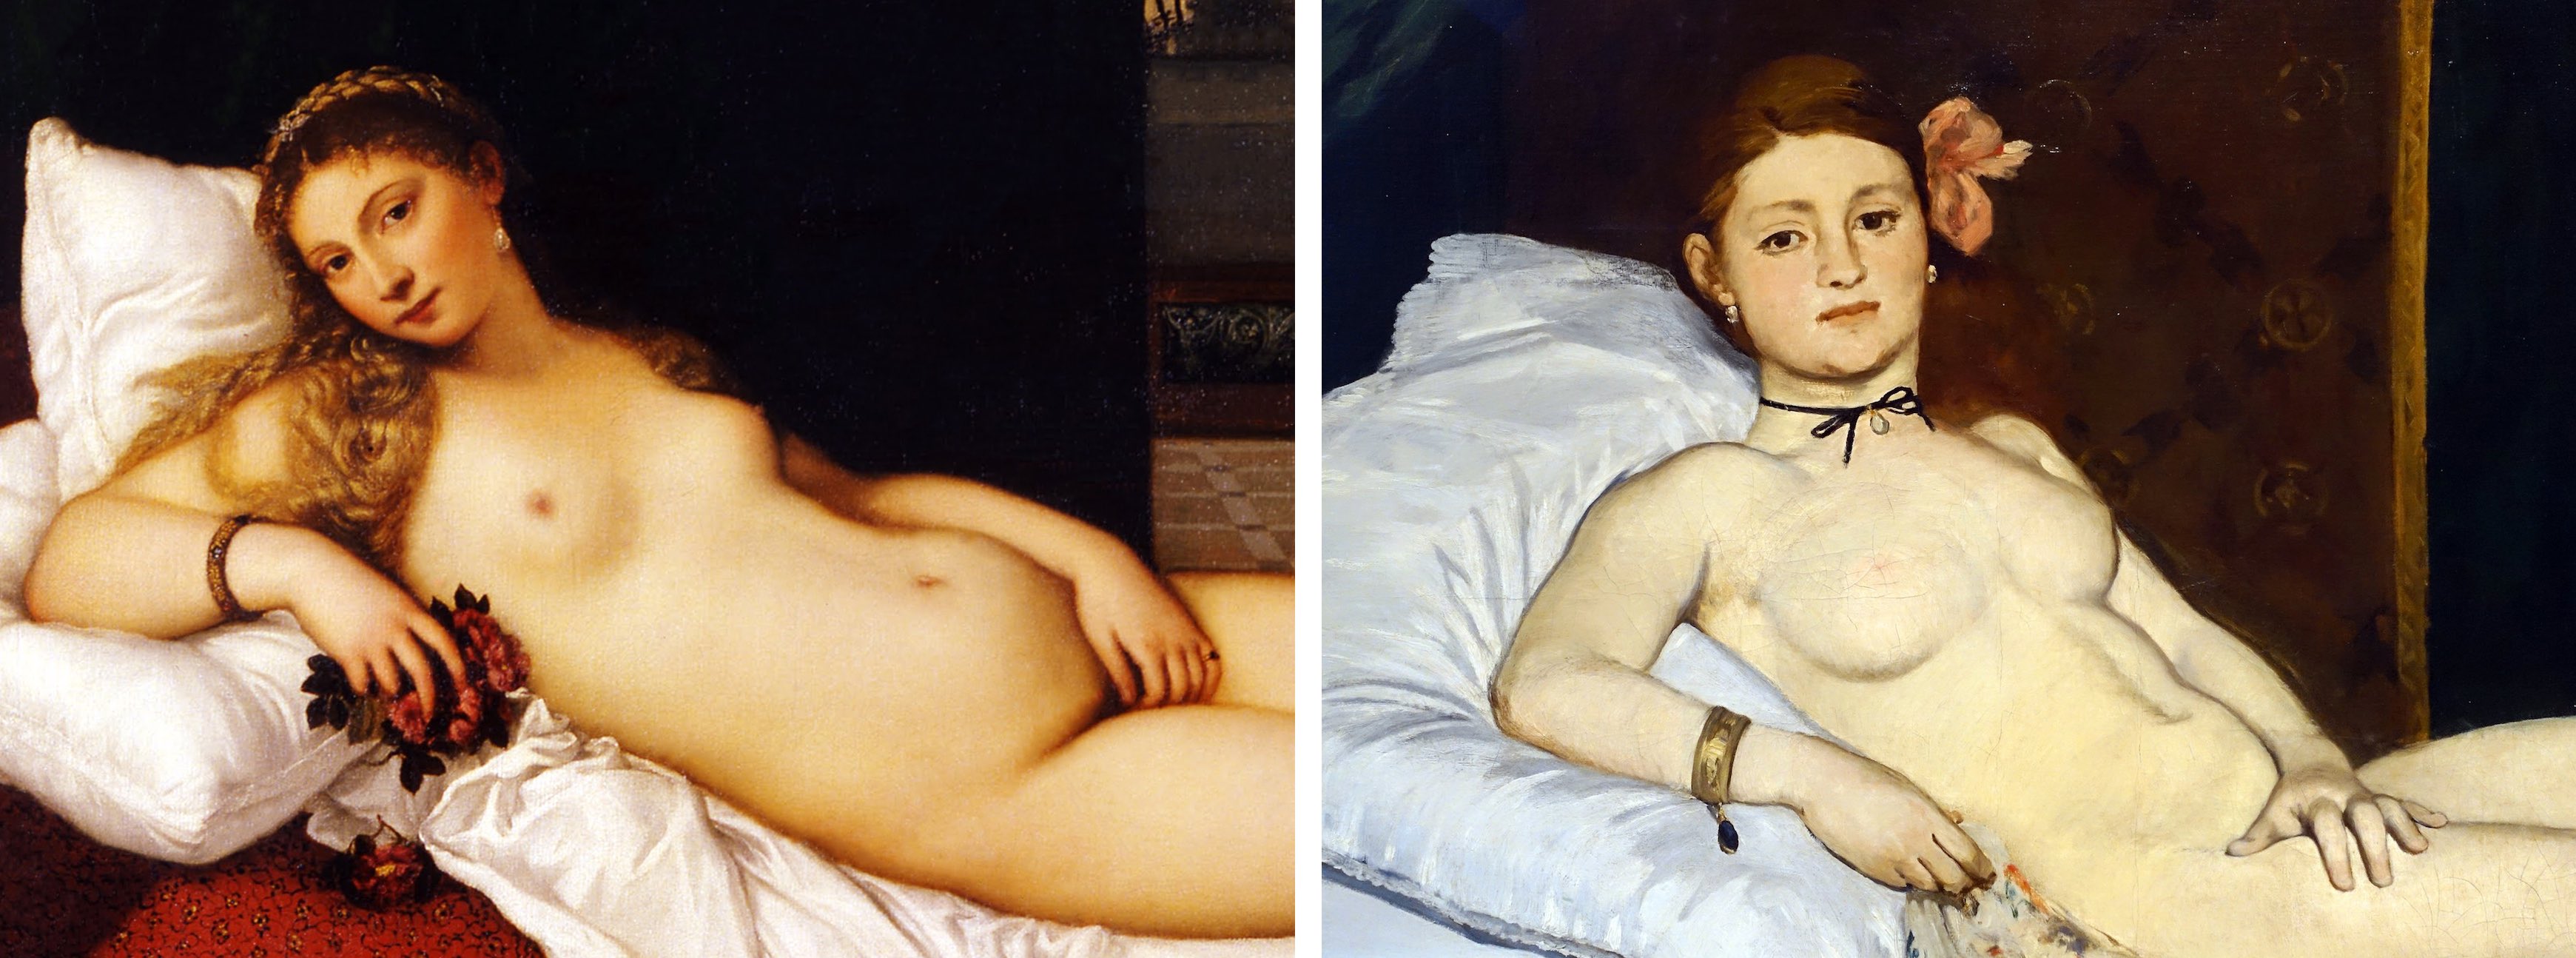 Left: Titian, Venus of Urbino, 1538, oil on canvas, 119.20 x 165.50 cm (Galleria degli Uffizi, Florence); right: Édouard Manet, Olympia, 1863, oil on canvas, 130 x 190 cm (Musée d'Orsay, Paris)